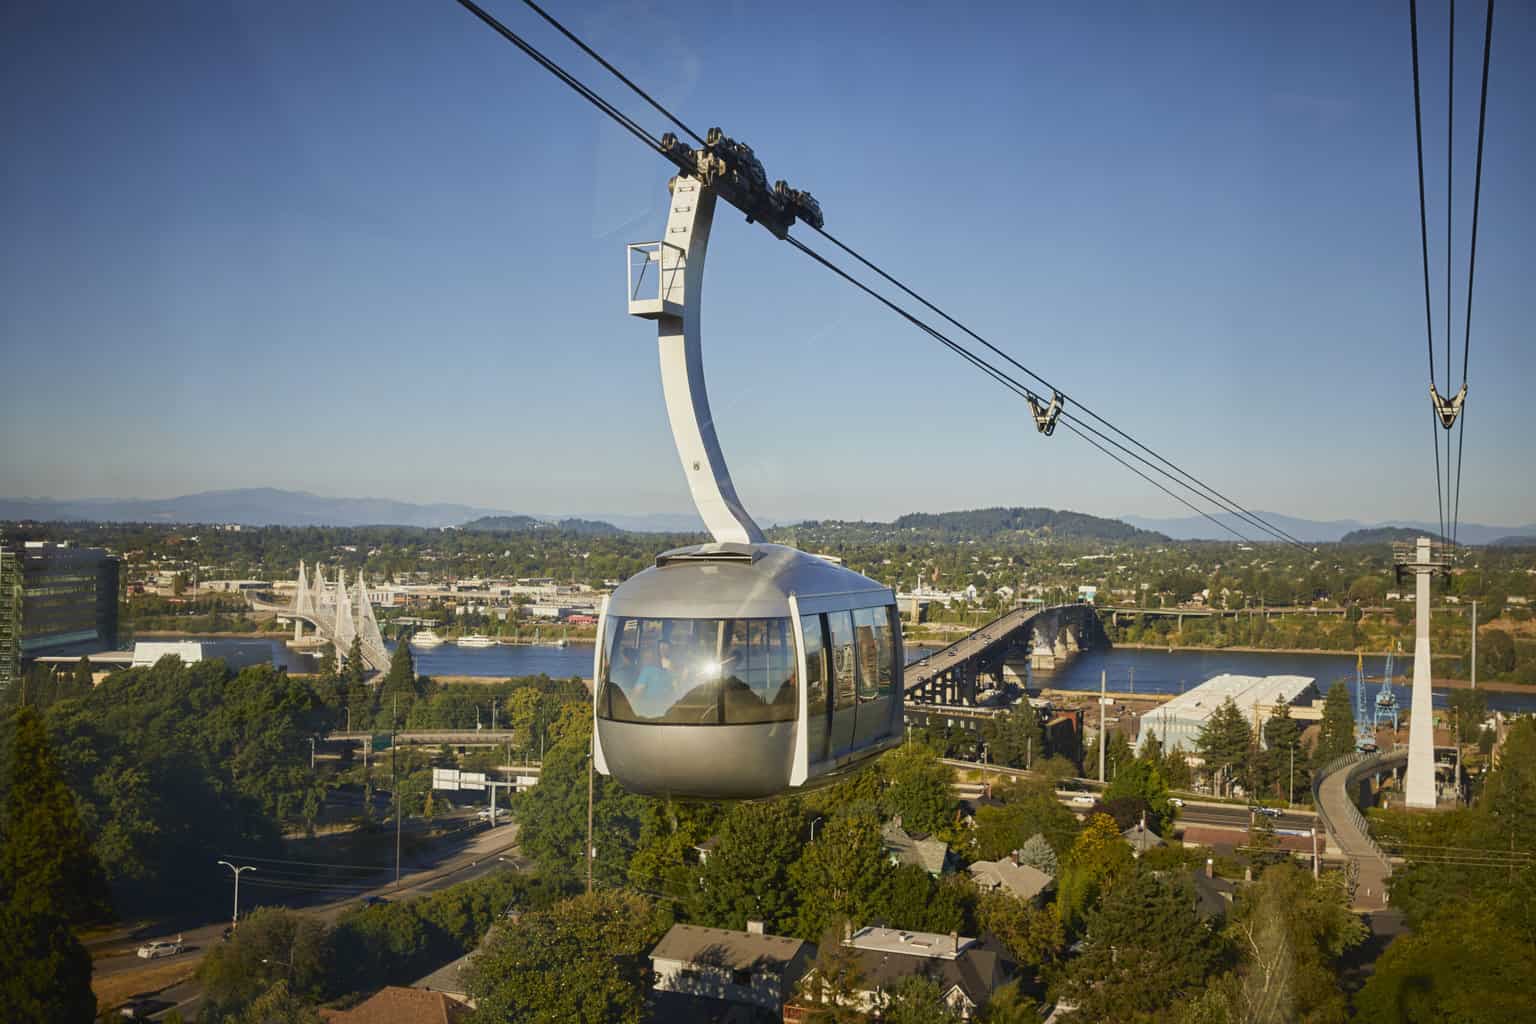 Flying tramway Aerial cable cars Transportation innovation Urban transit Gondola systems